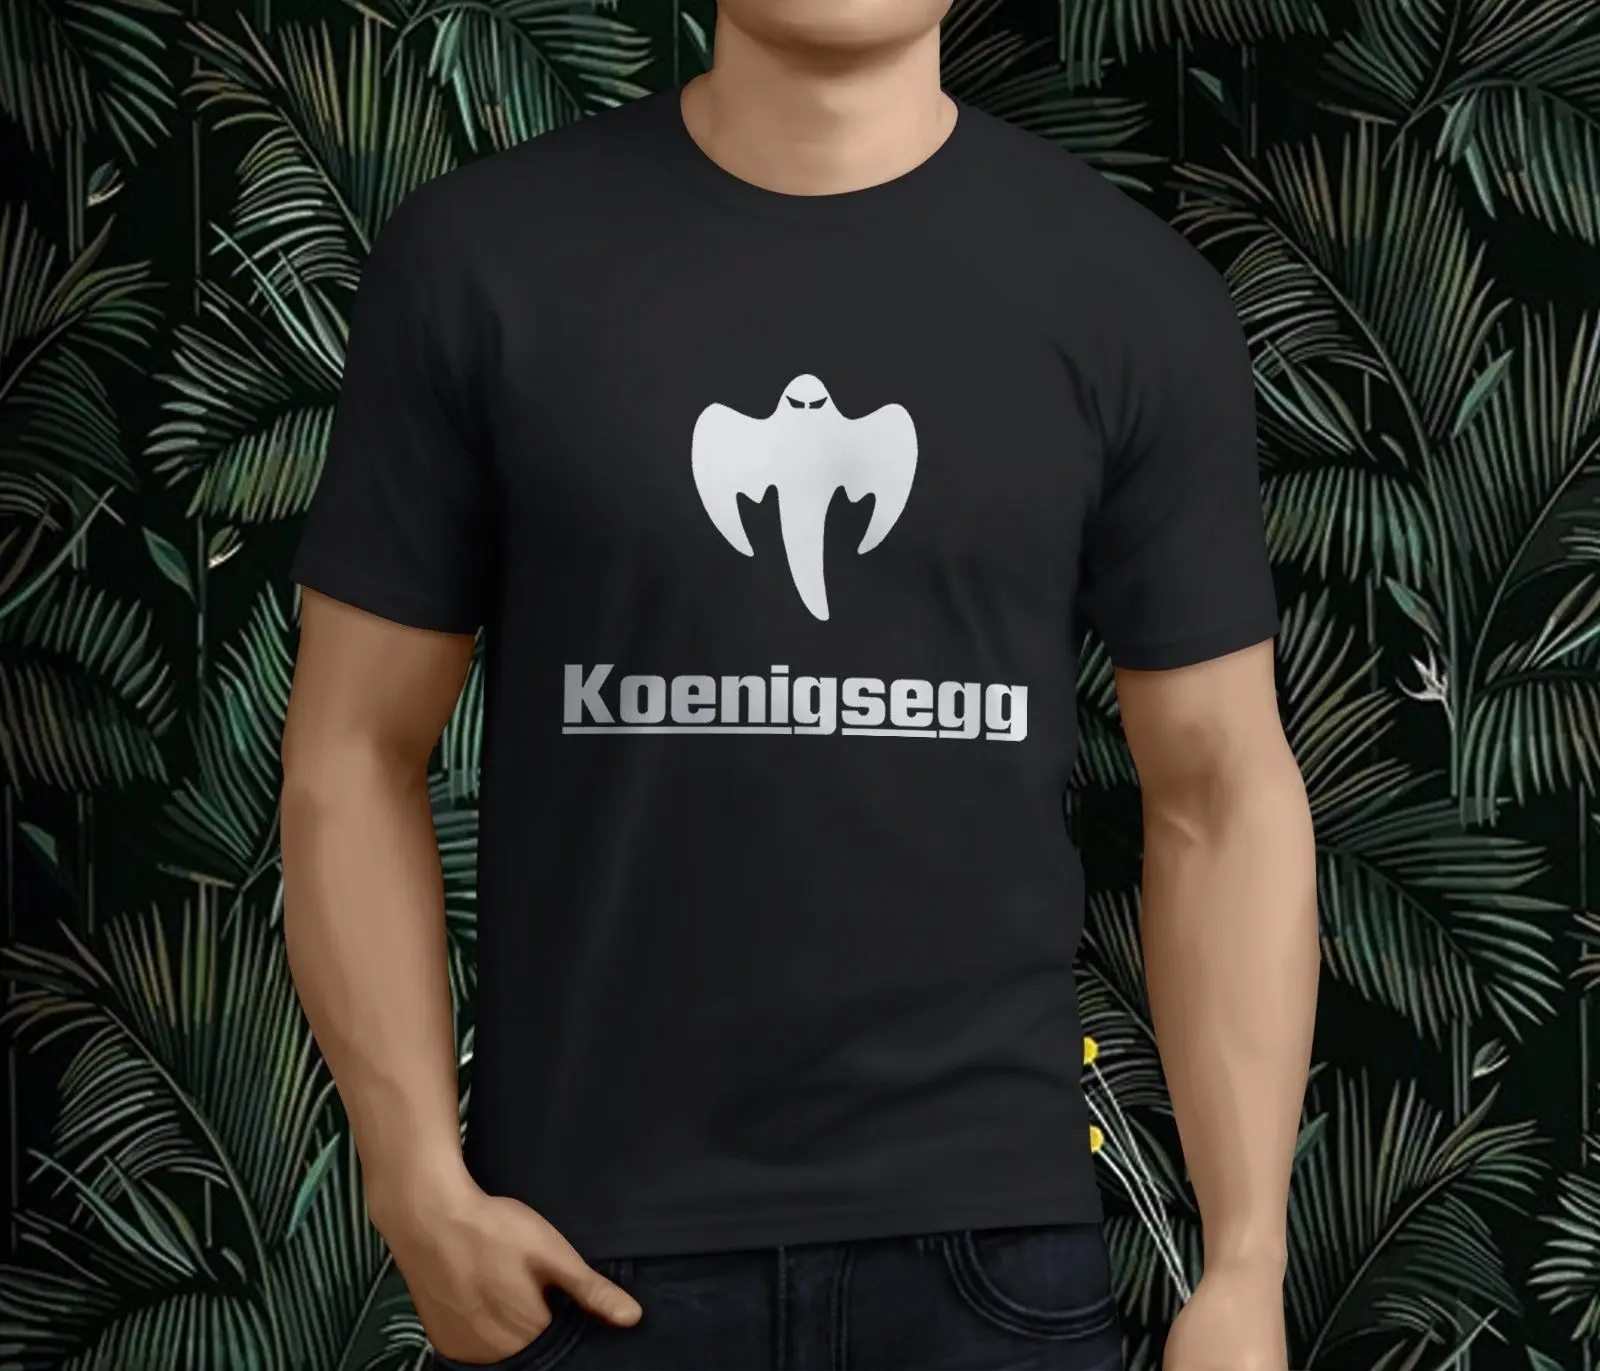 Koenigsegg Ghost Logo Supercar Men's Black T-Shirt Size S to 3XL